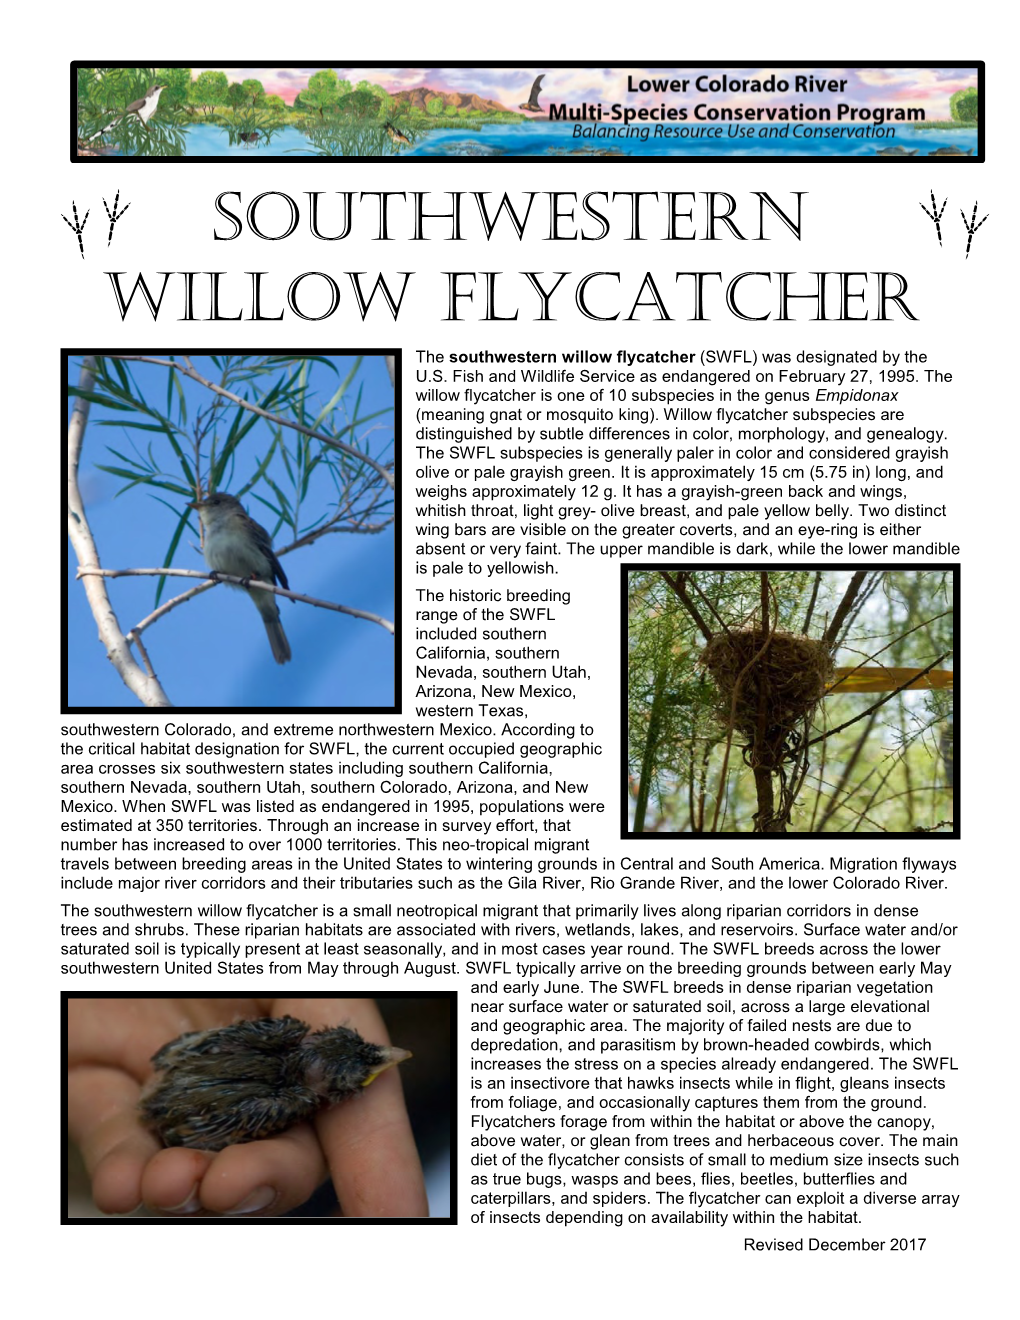 Southwestern Willow Flycatcher Fact Sheet